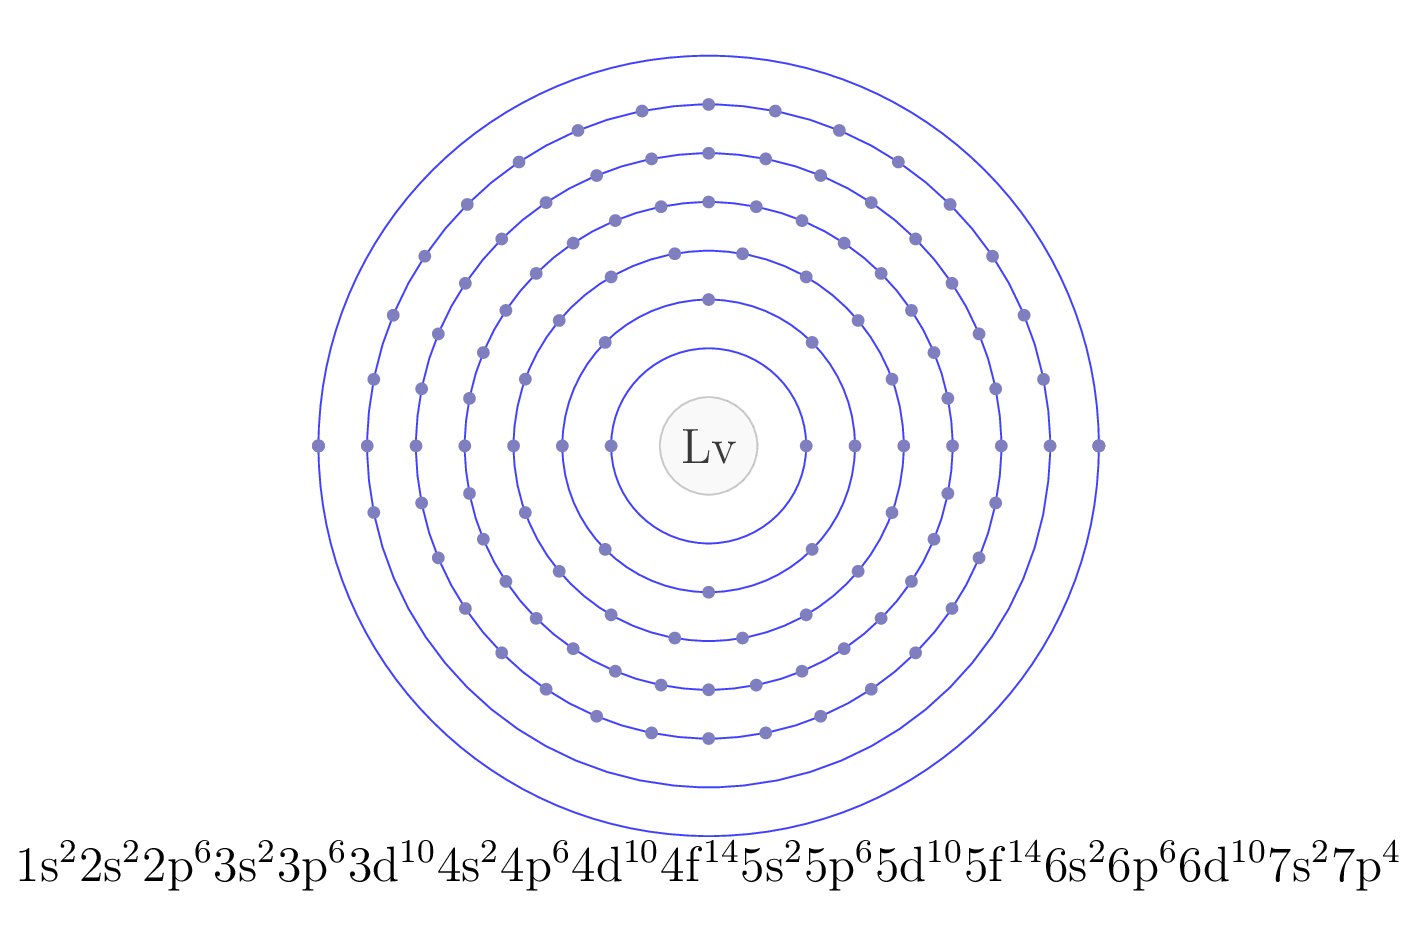 electron configuration of element Lv